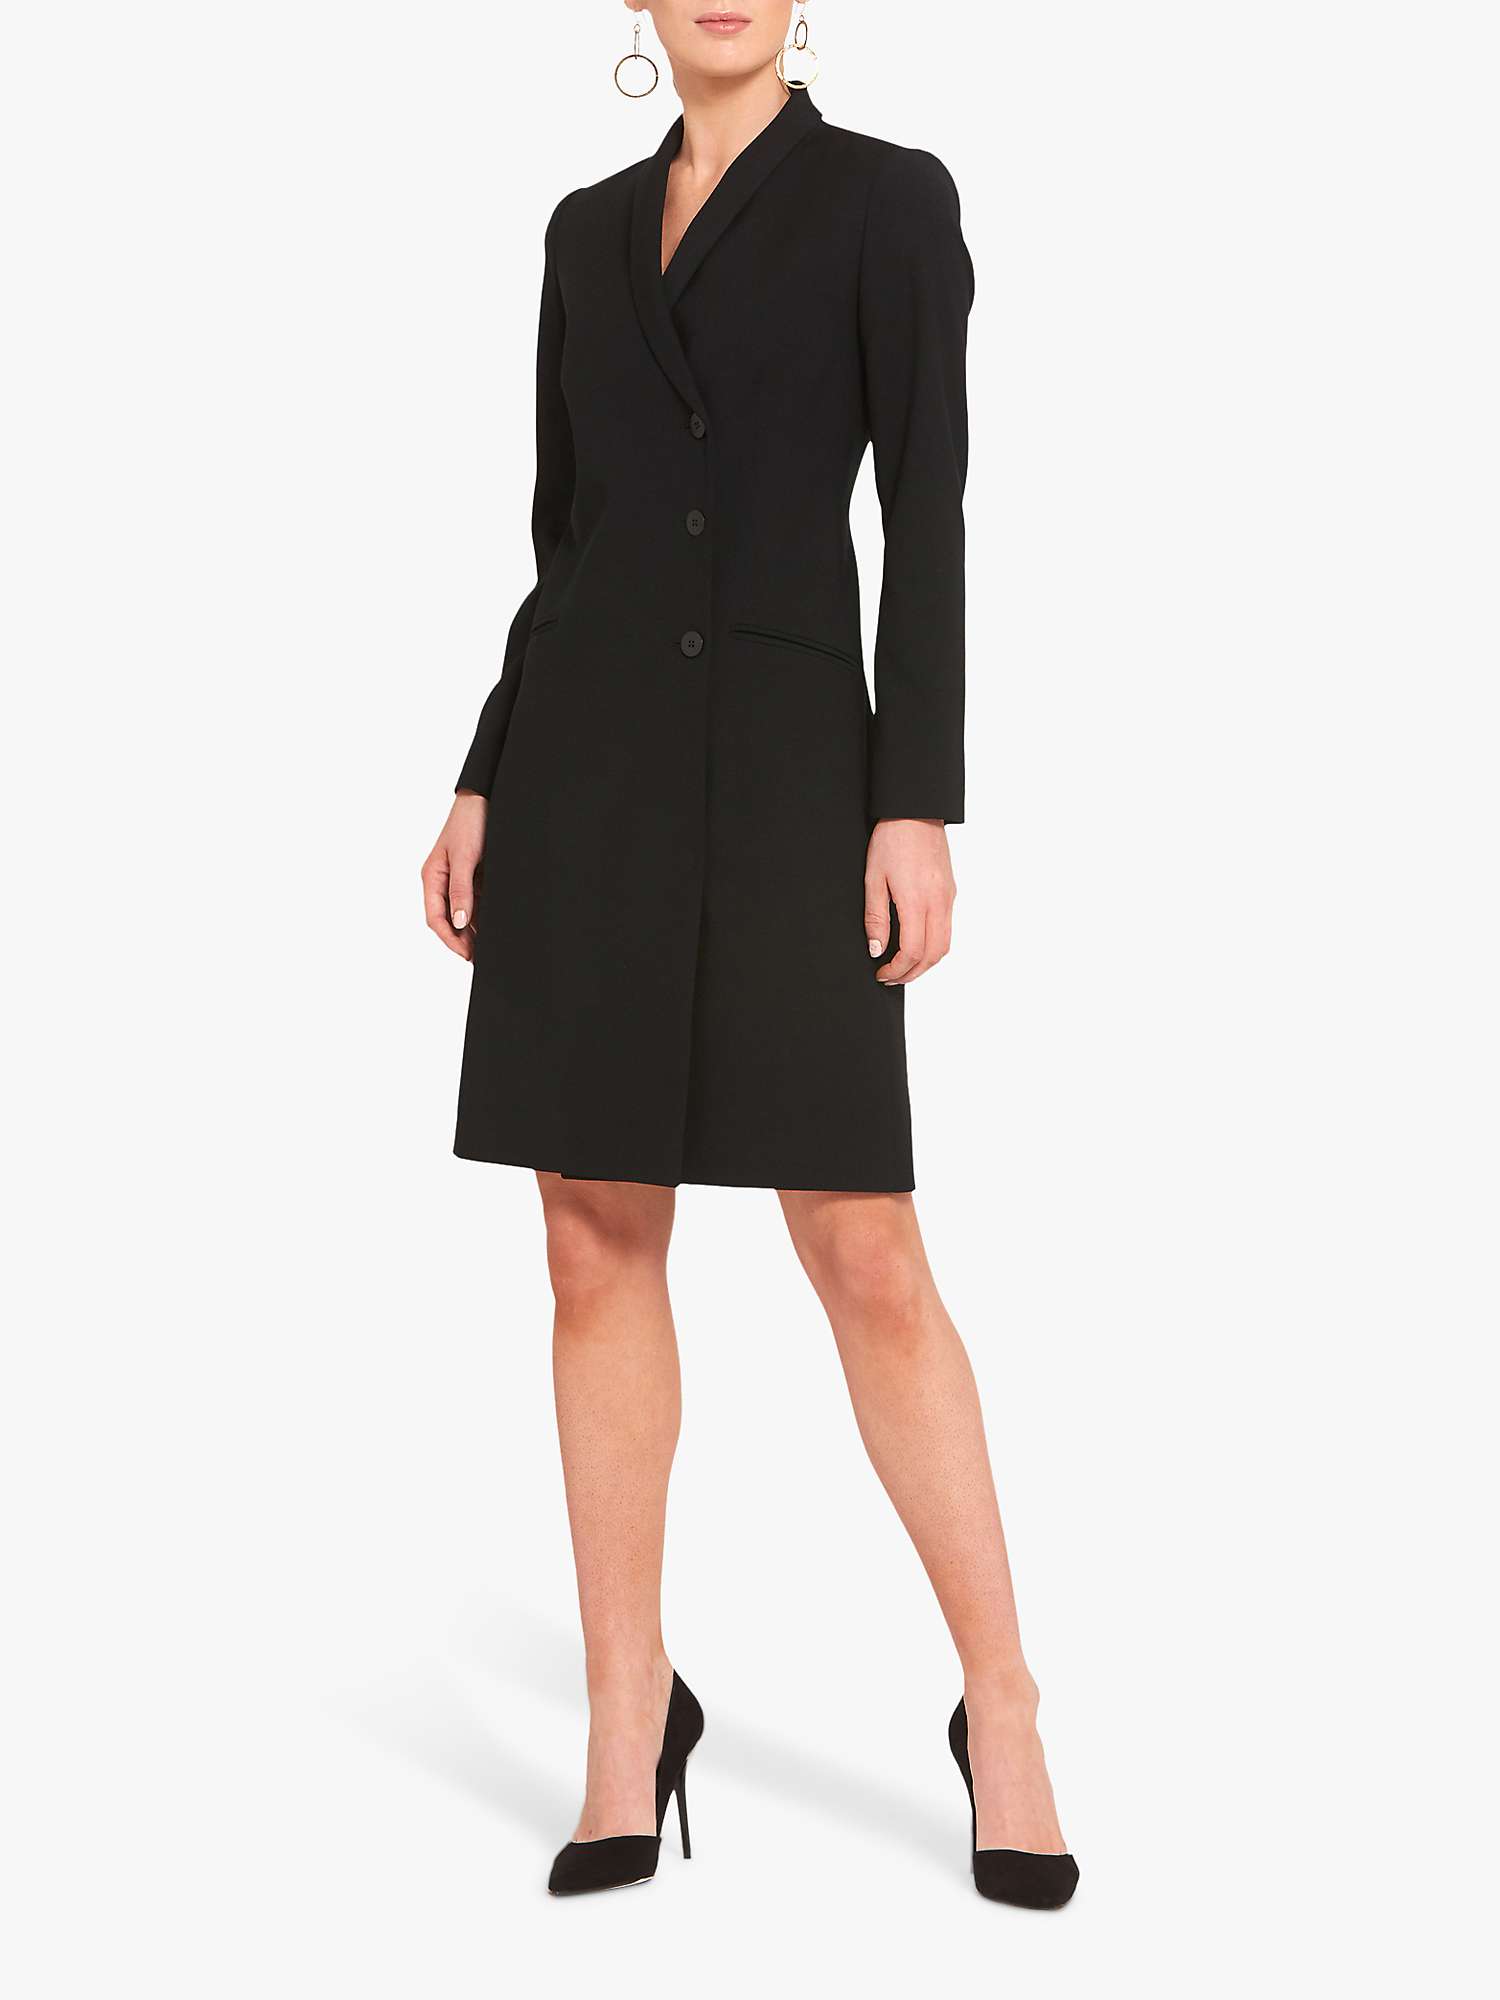 Buy Helen McAlinden Cameron Wool Blend Tuxedo Jacket Dress, Black Online at johnlewis.com